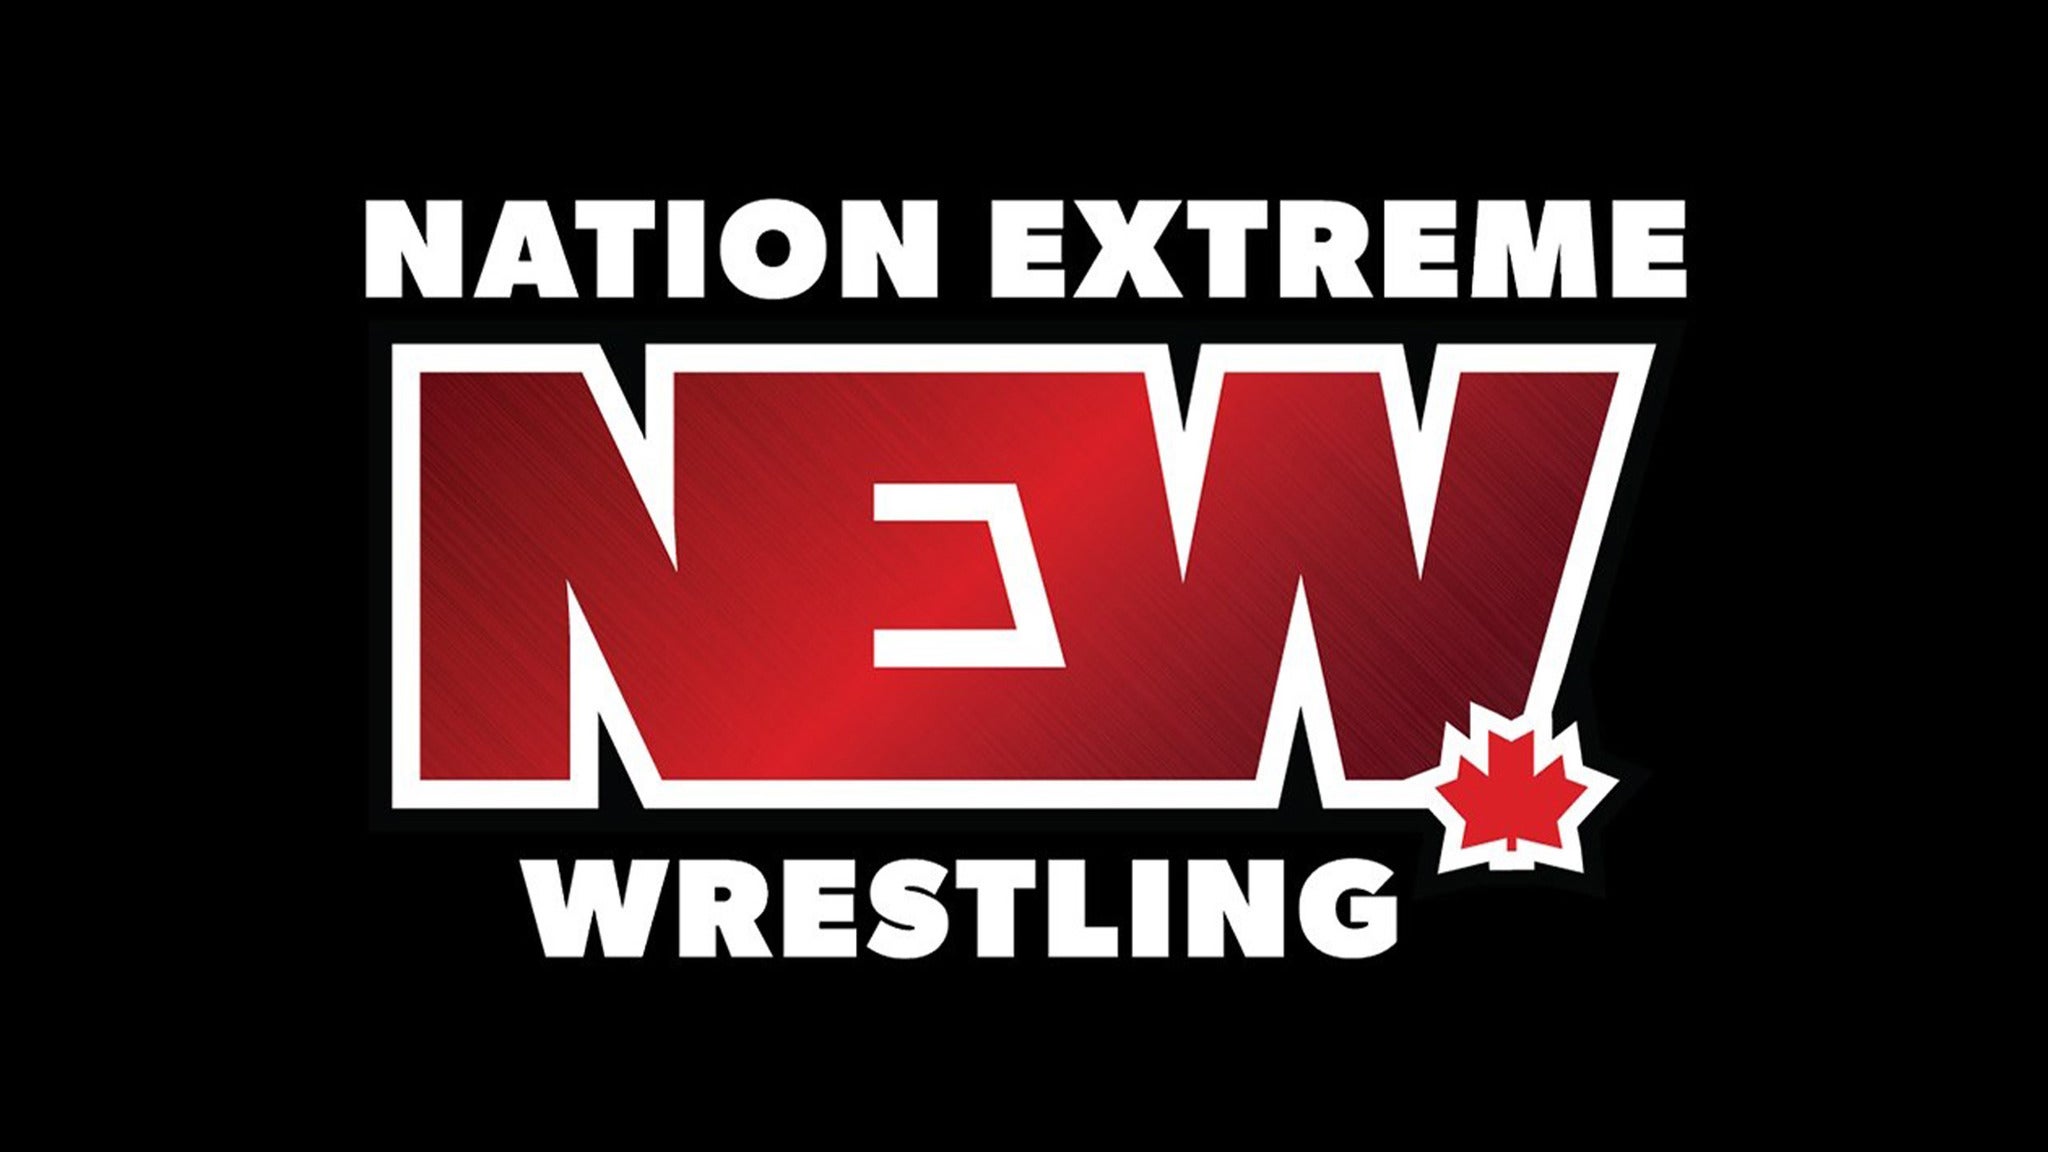 Nation Extreme Wrestling (NEW Wrestling) in Vancouver promo photo for Live Nation presale offer code